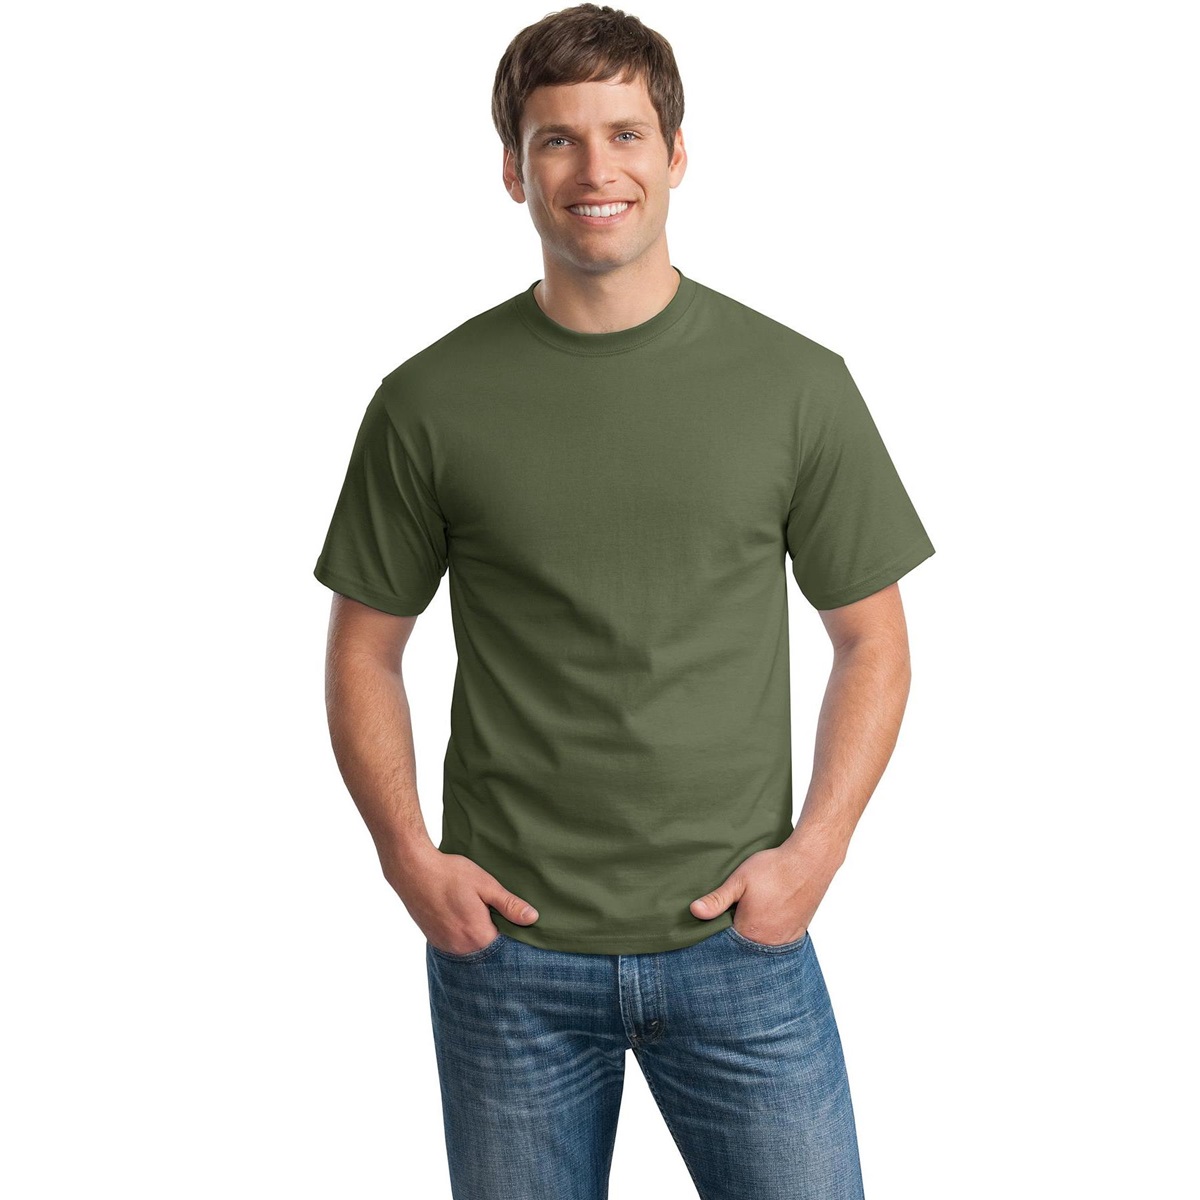 Hanes 5250 Tagless Cotton T-Shirt - Fatigue Green | FullSource.com